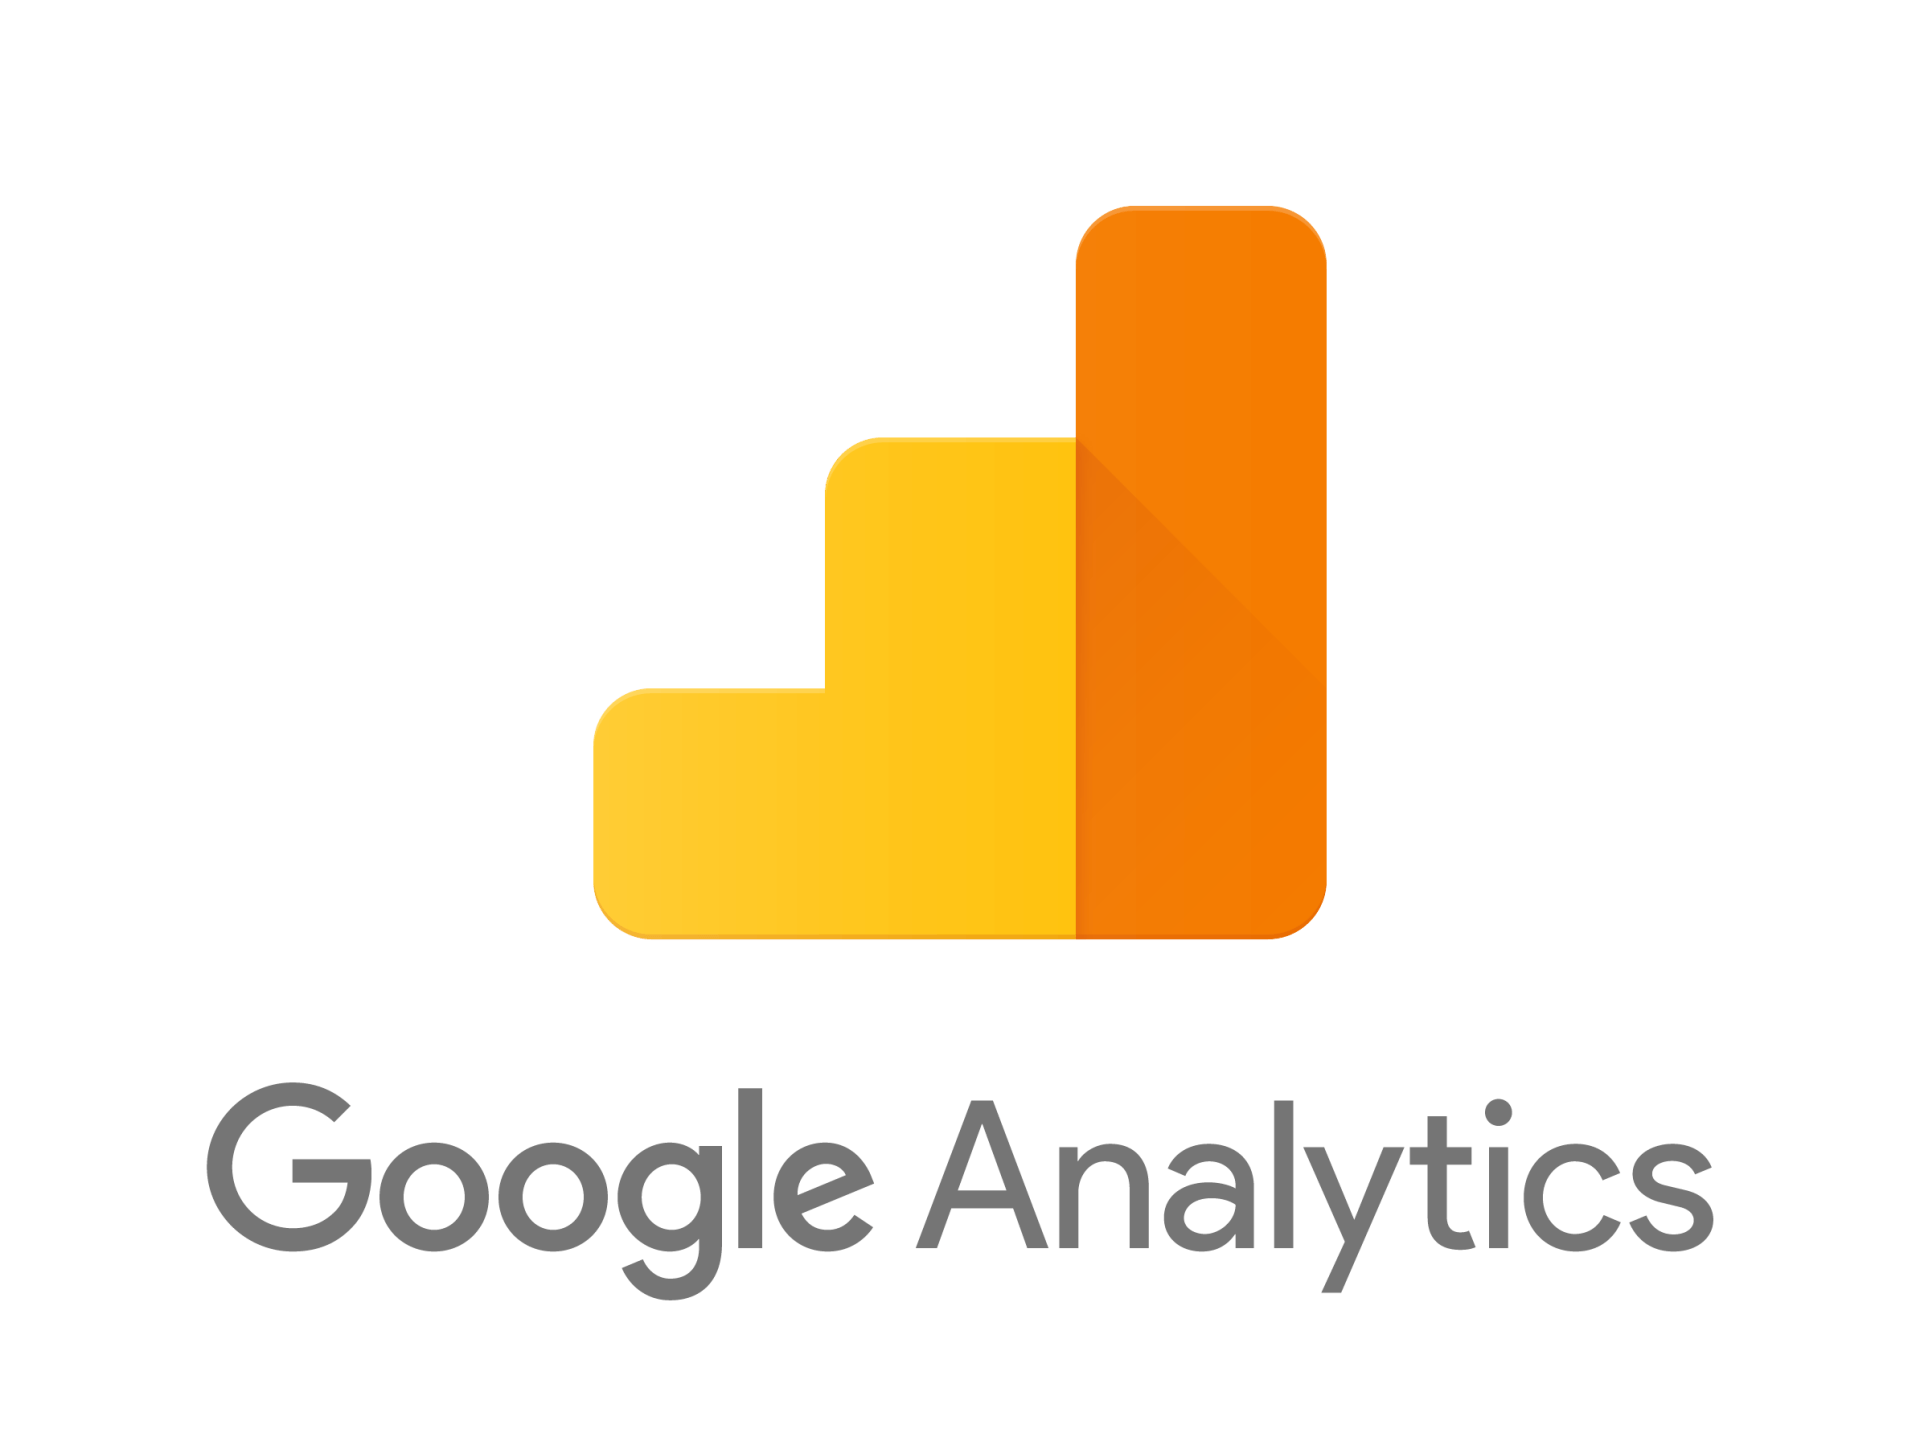 Google Analytic Logo